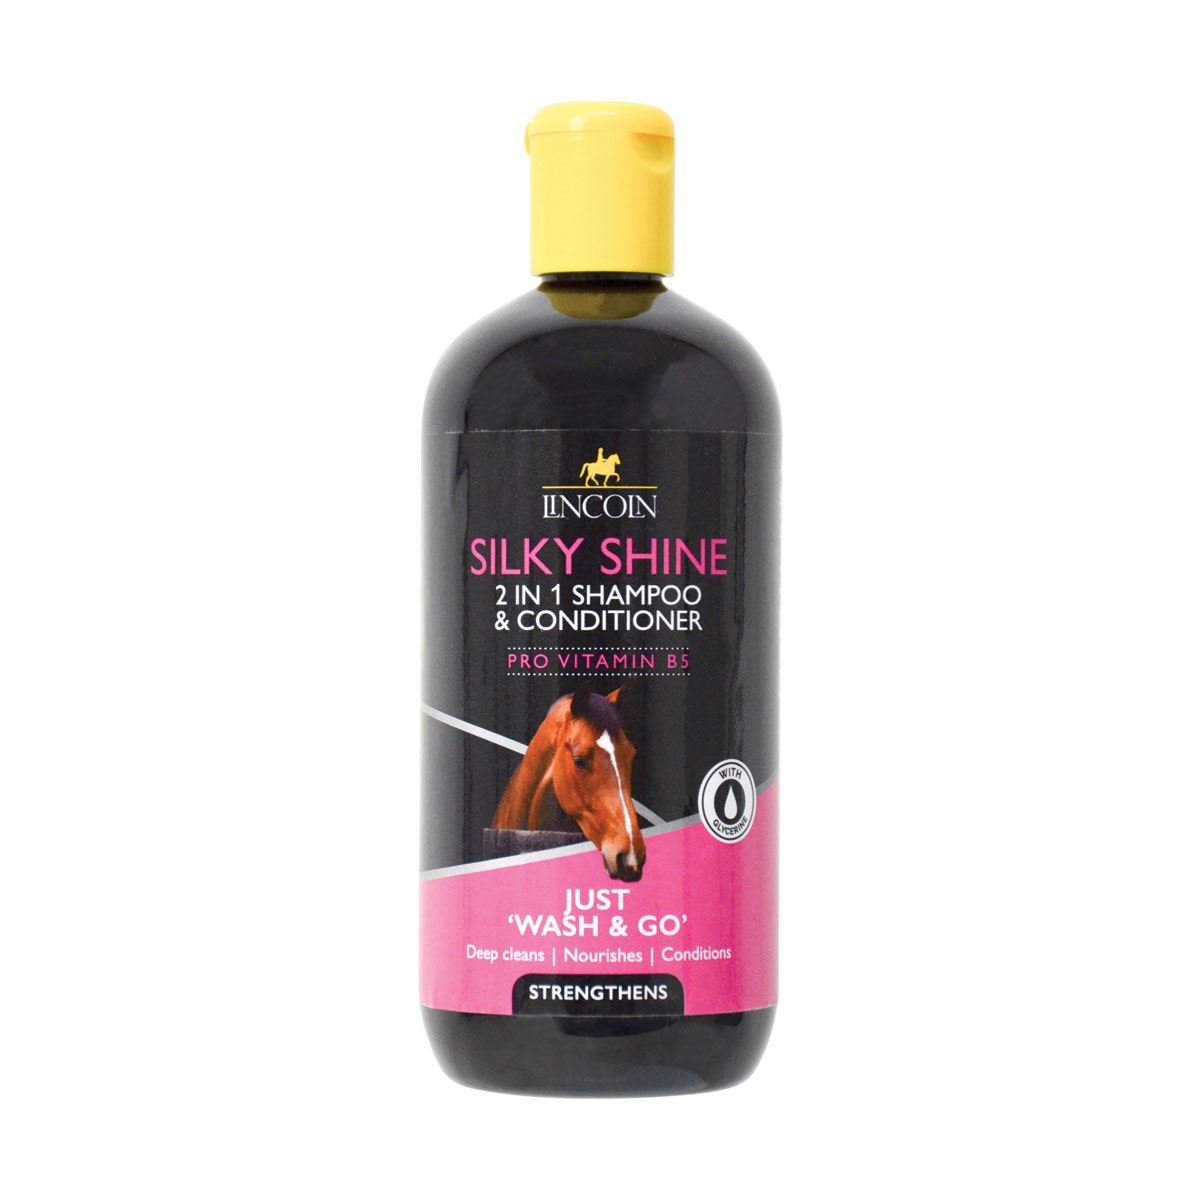 Lincoln Silky Shine 2 In 1 Shampoo & Conditioner - Just Horse Riders